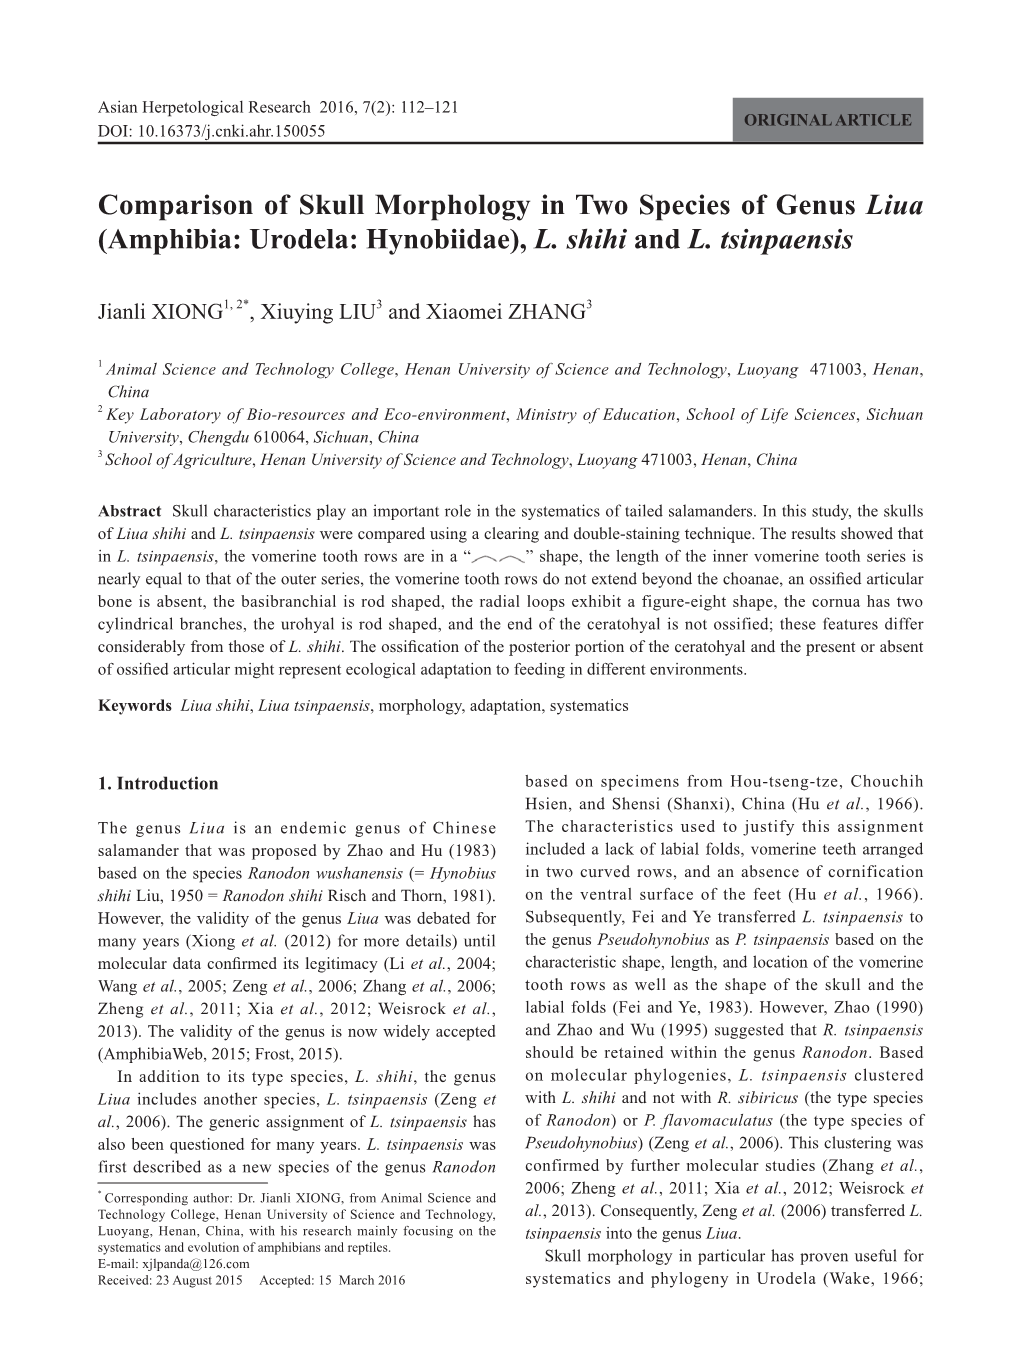 Comparison of Skull Morphology in Two Species of Genus Liua (Amphibia: Urodela: Hynobiidae), L